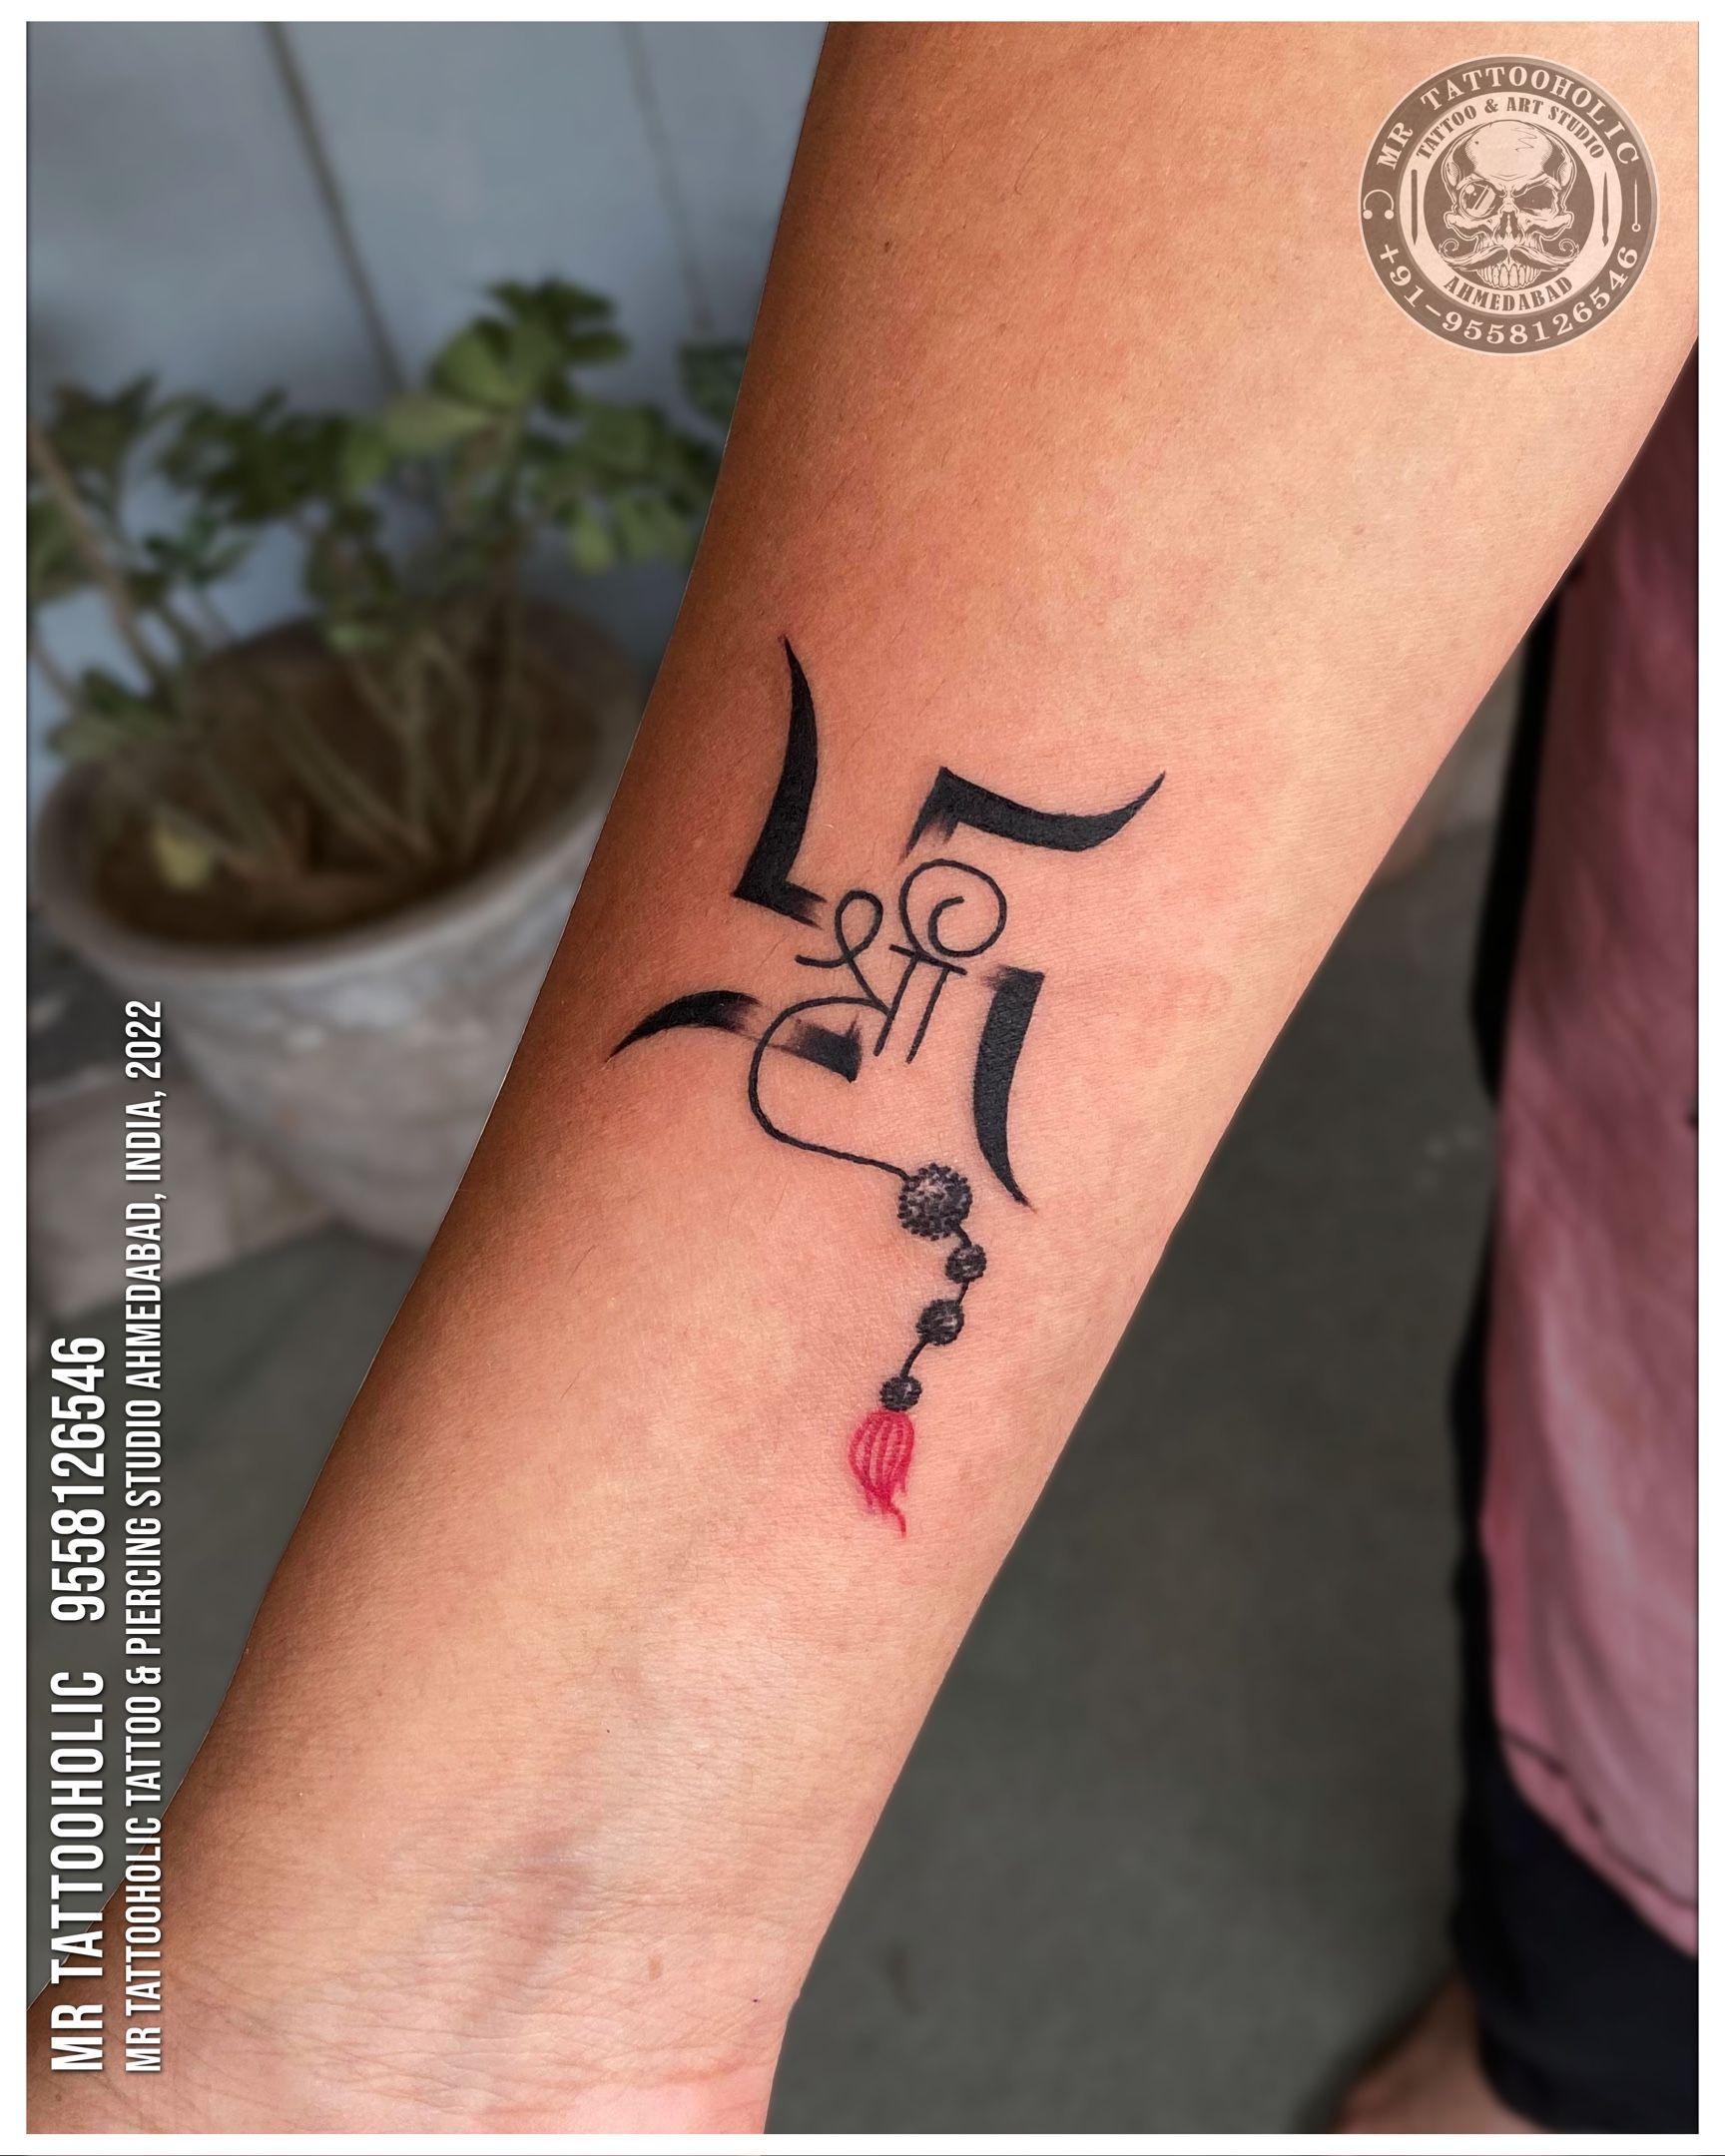 Share 85 about shri tattoo designs unmissable  indaotaonec